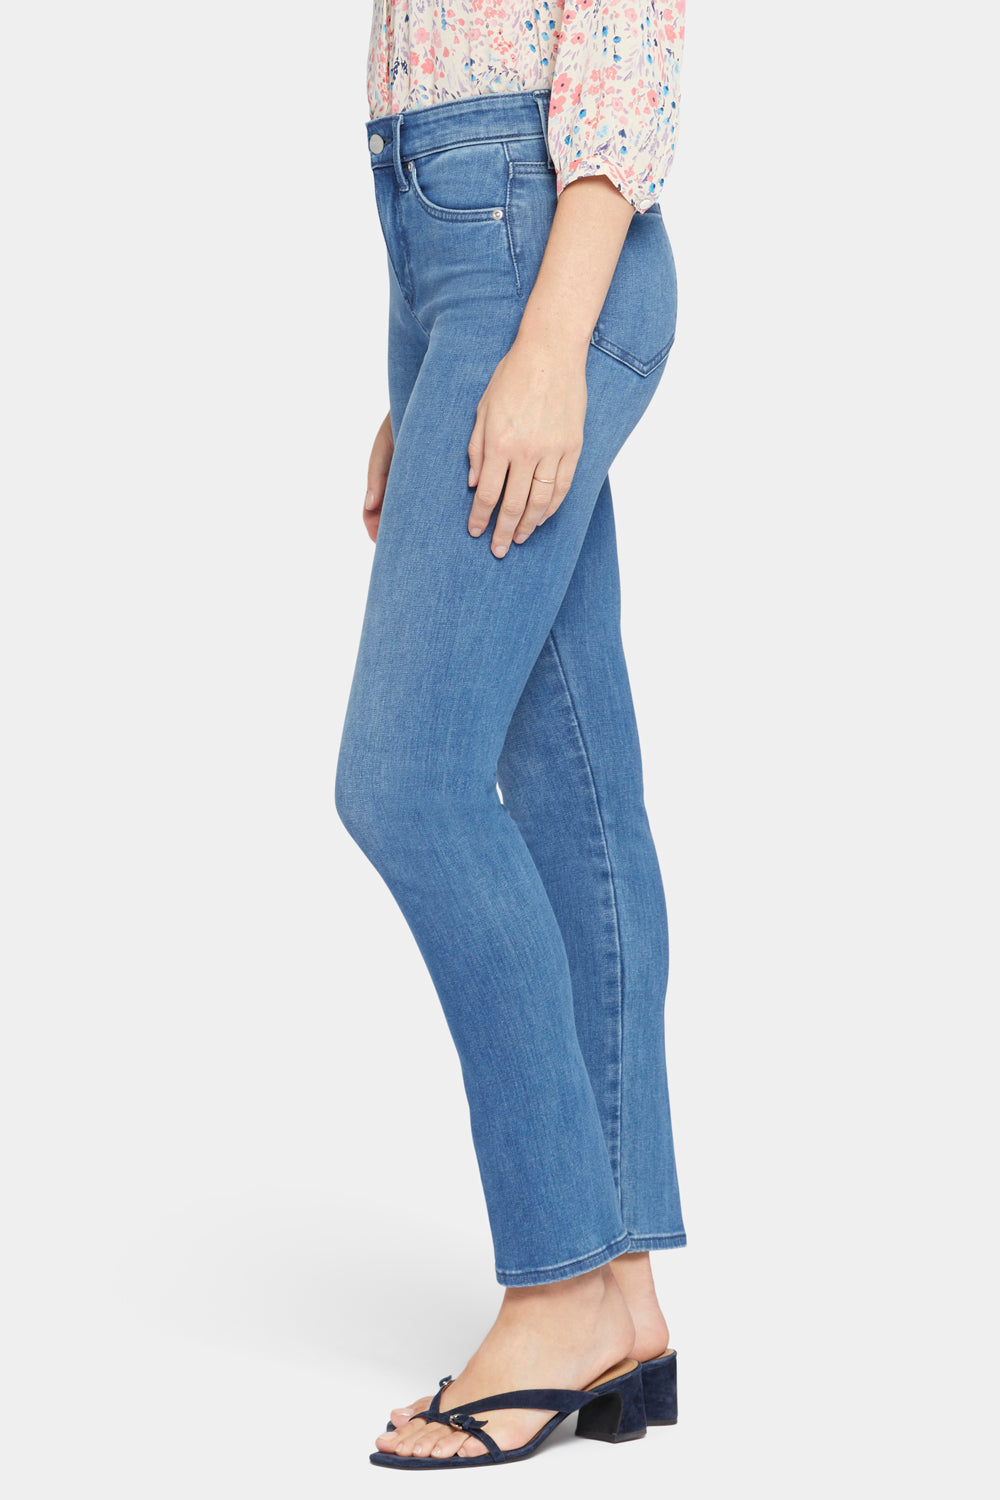 NYDJ Le Silhouette Sheri Slim Jeans  - Stunning